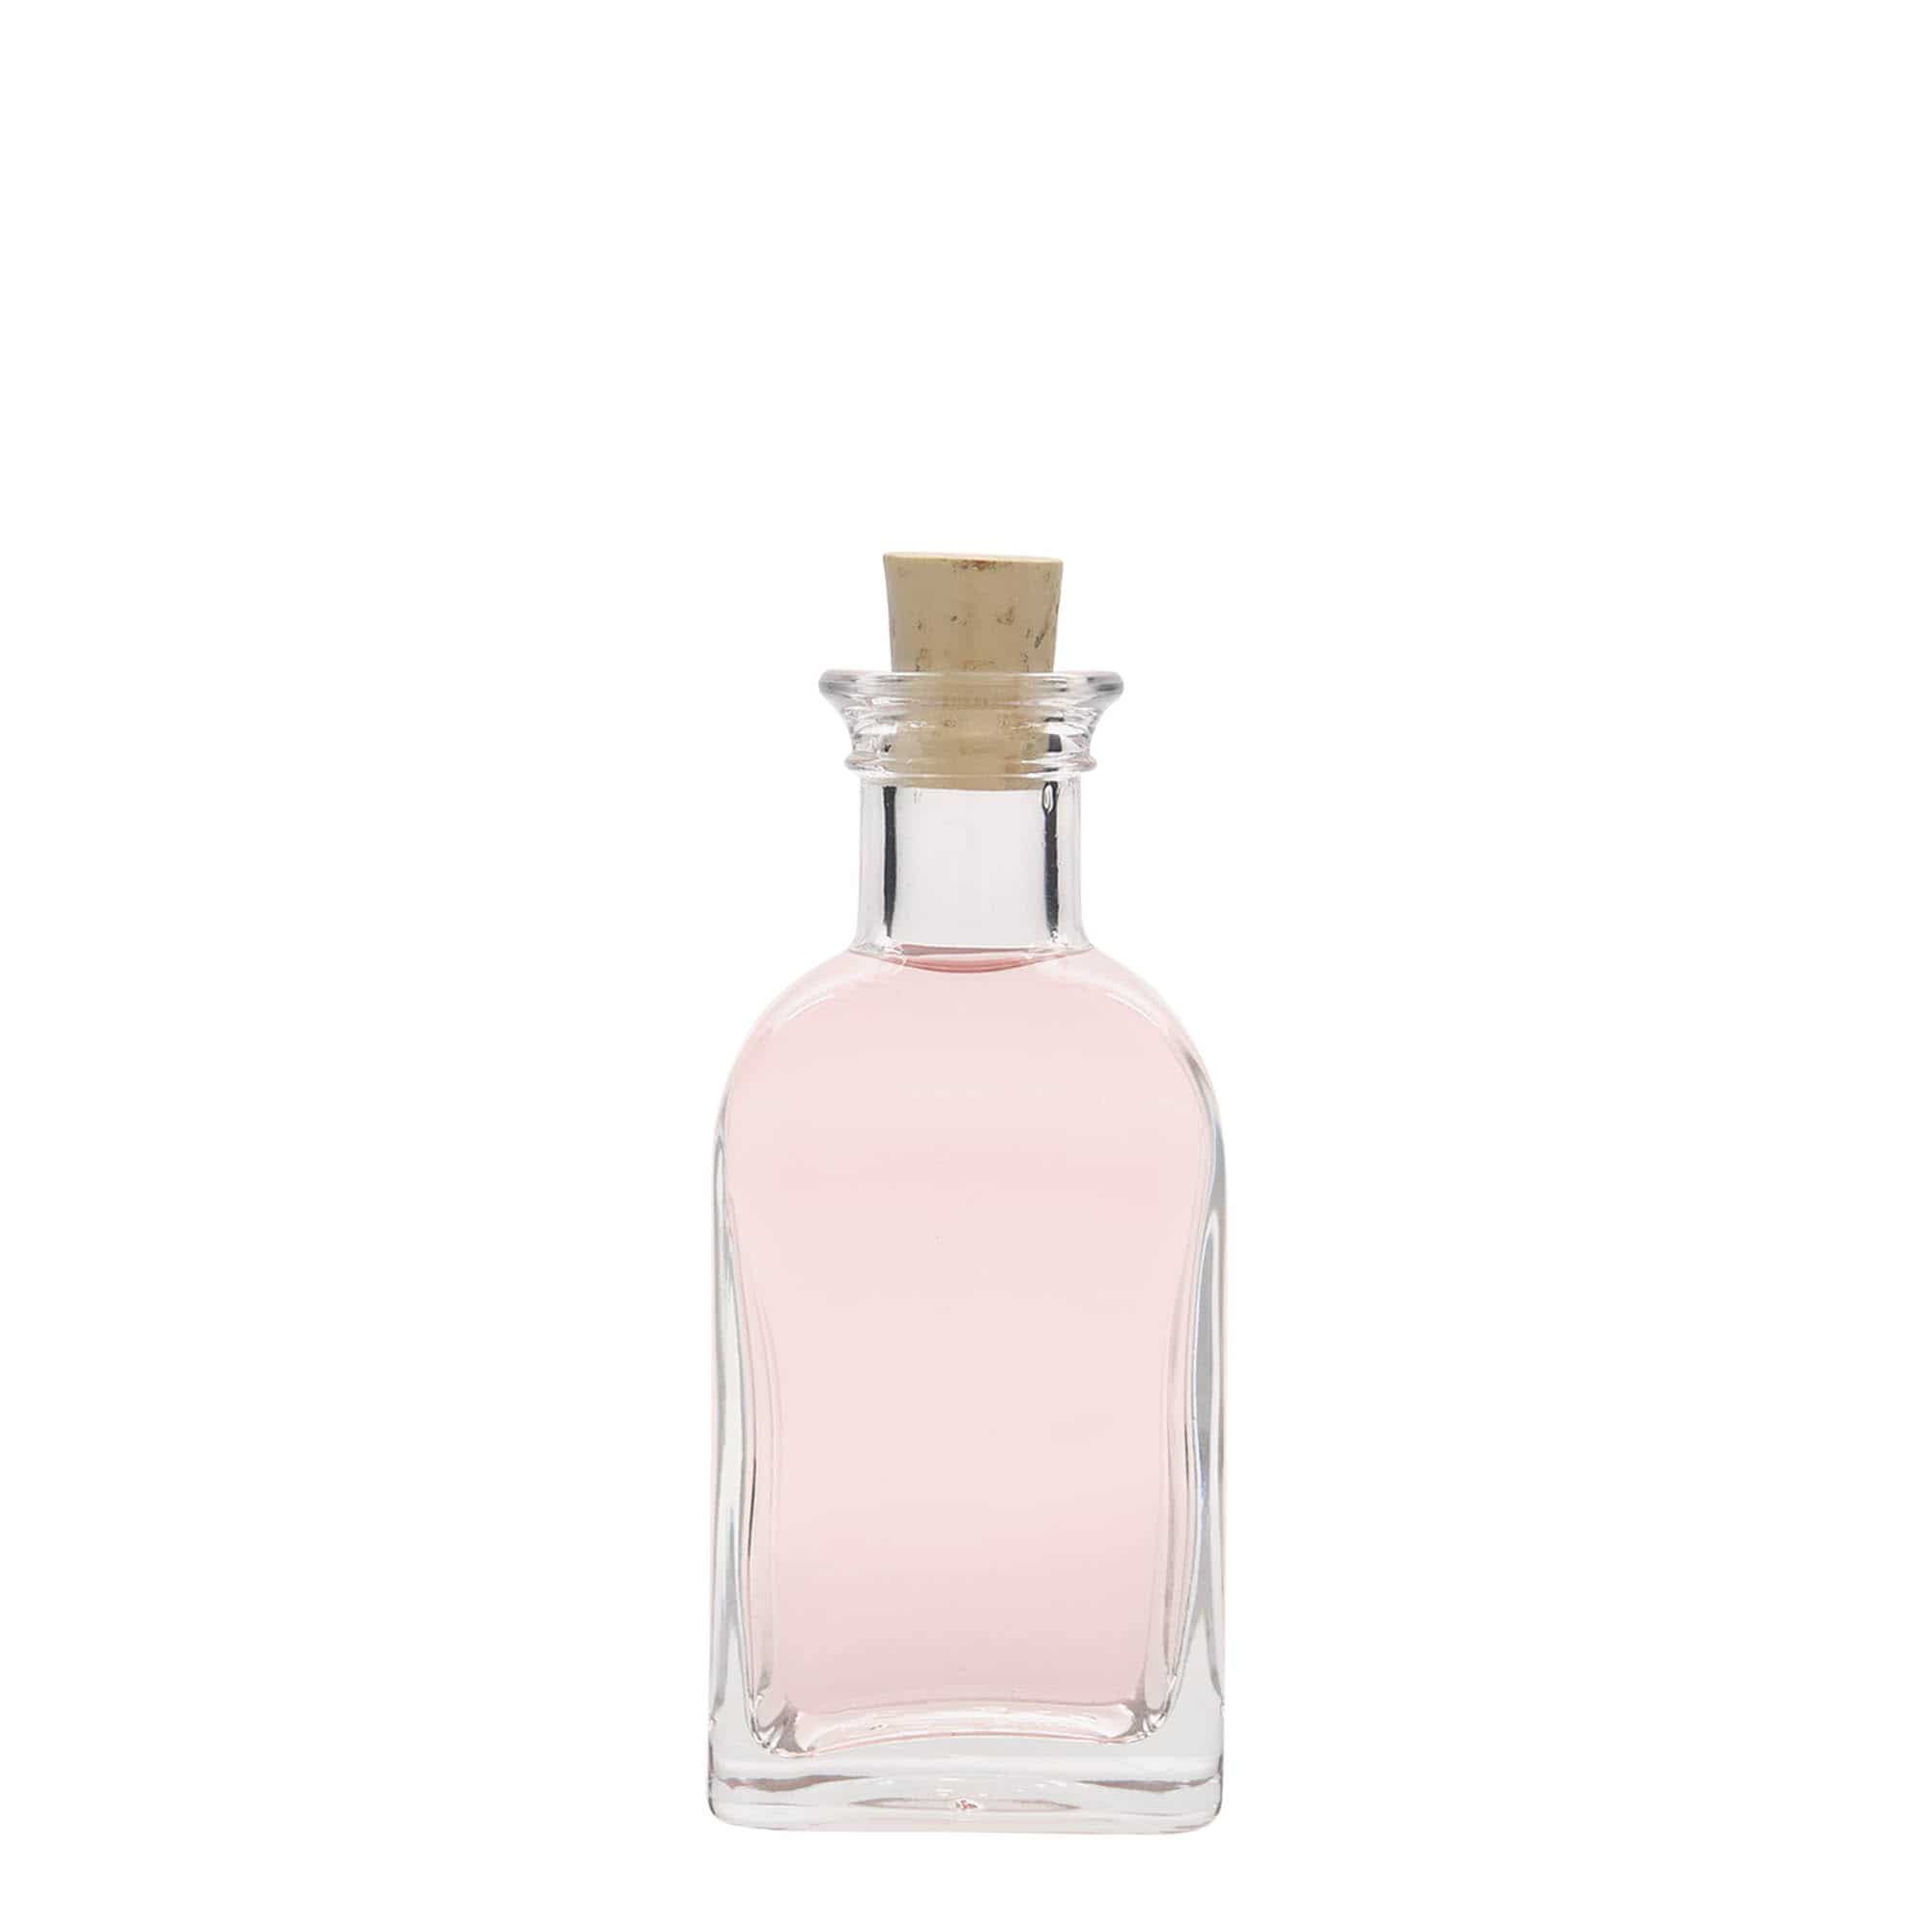 100 ml glass apothecary bottle Carré, square, closure: cork